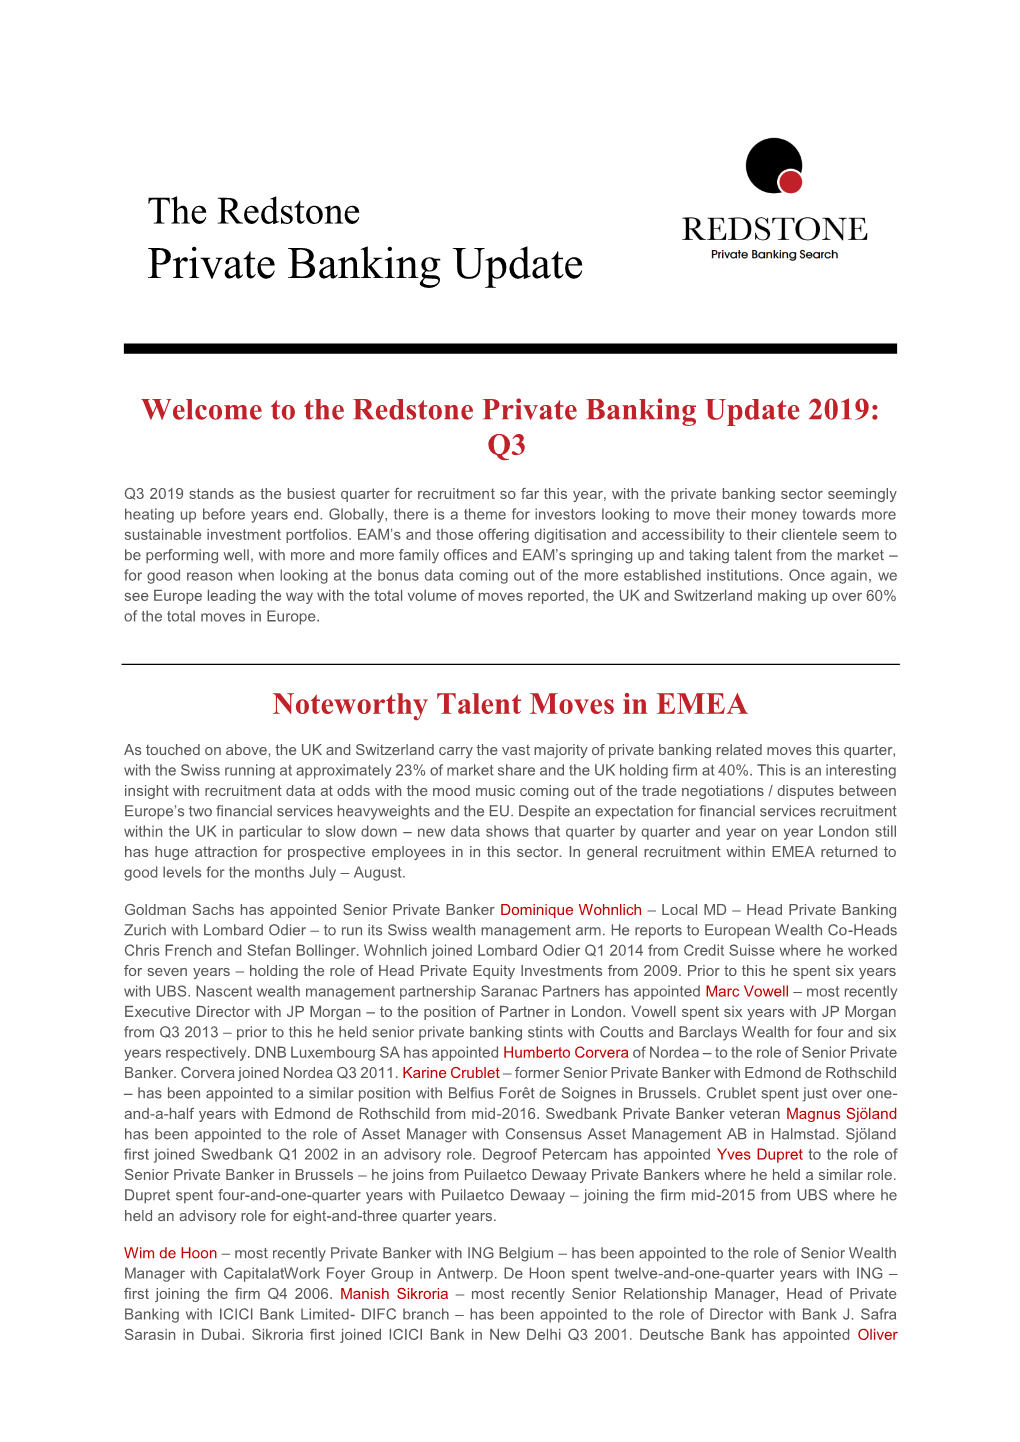 Redstone Private Banking Update Q3 2019